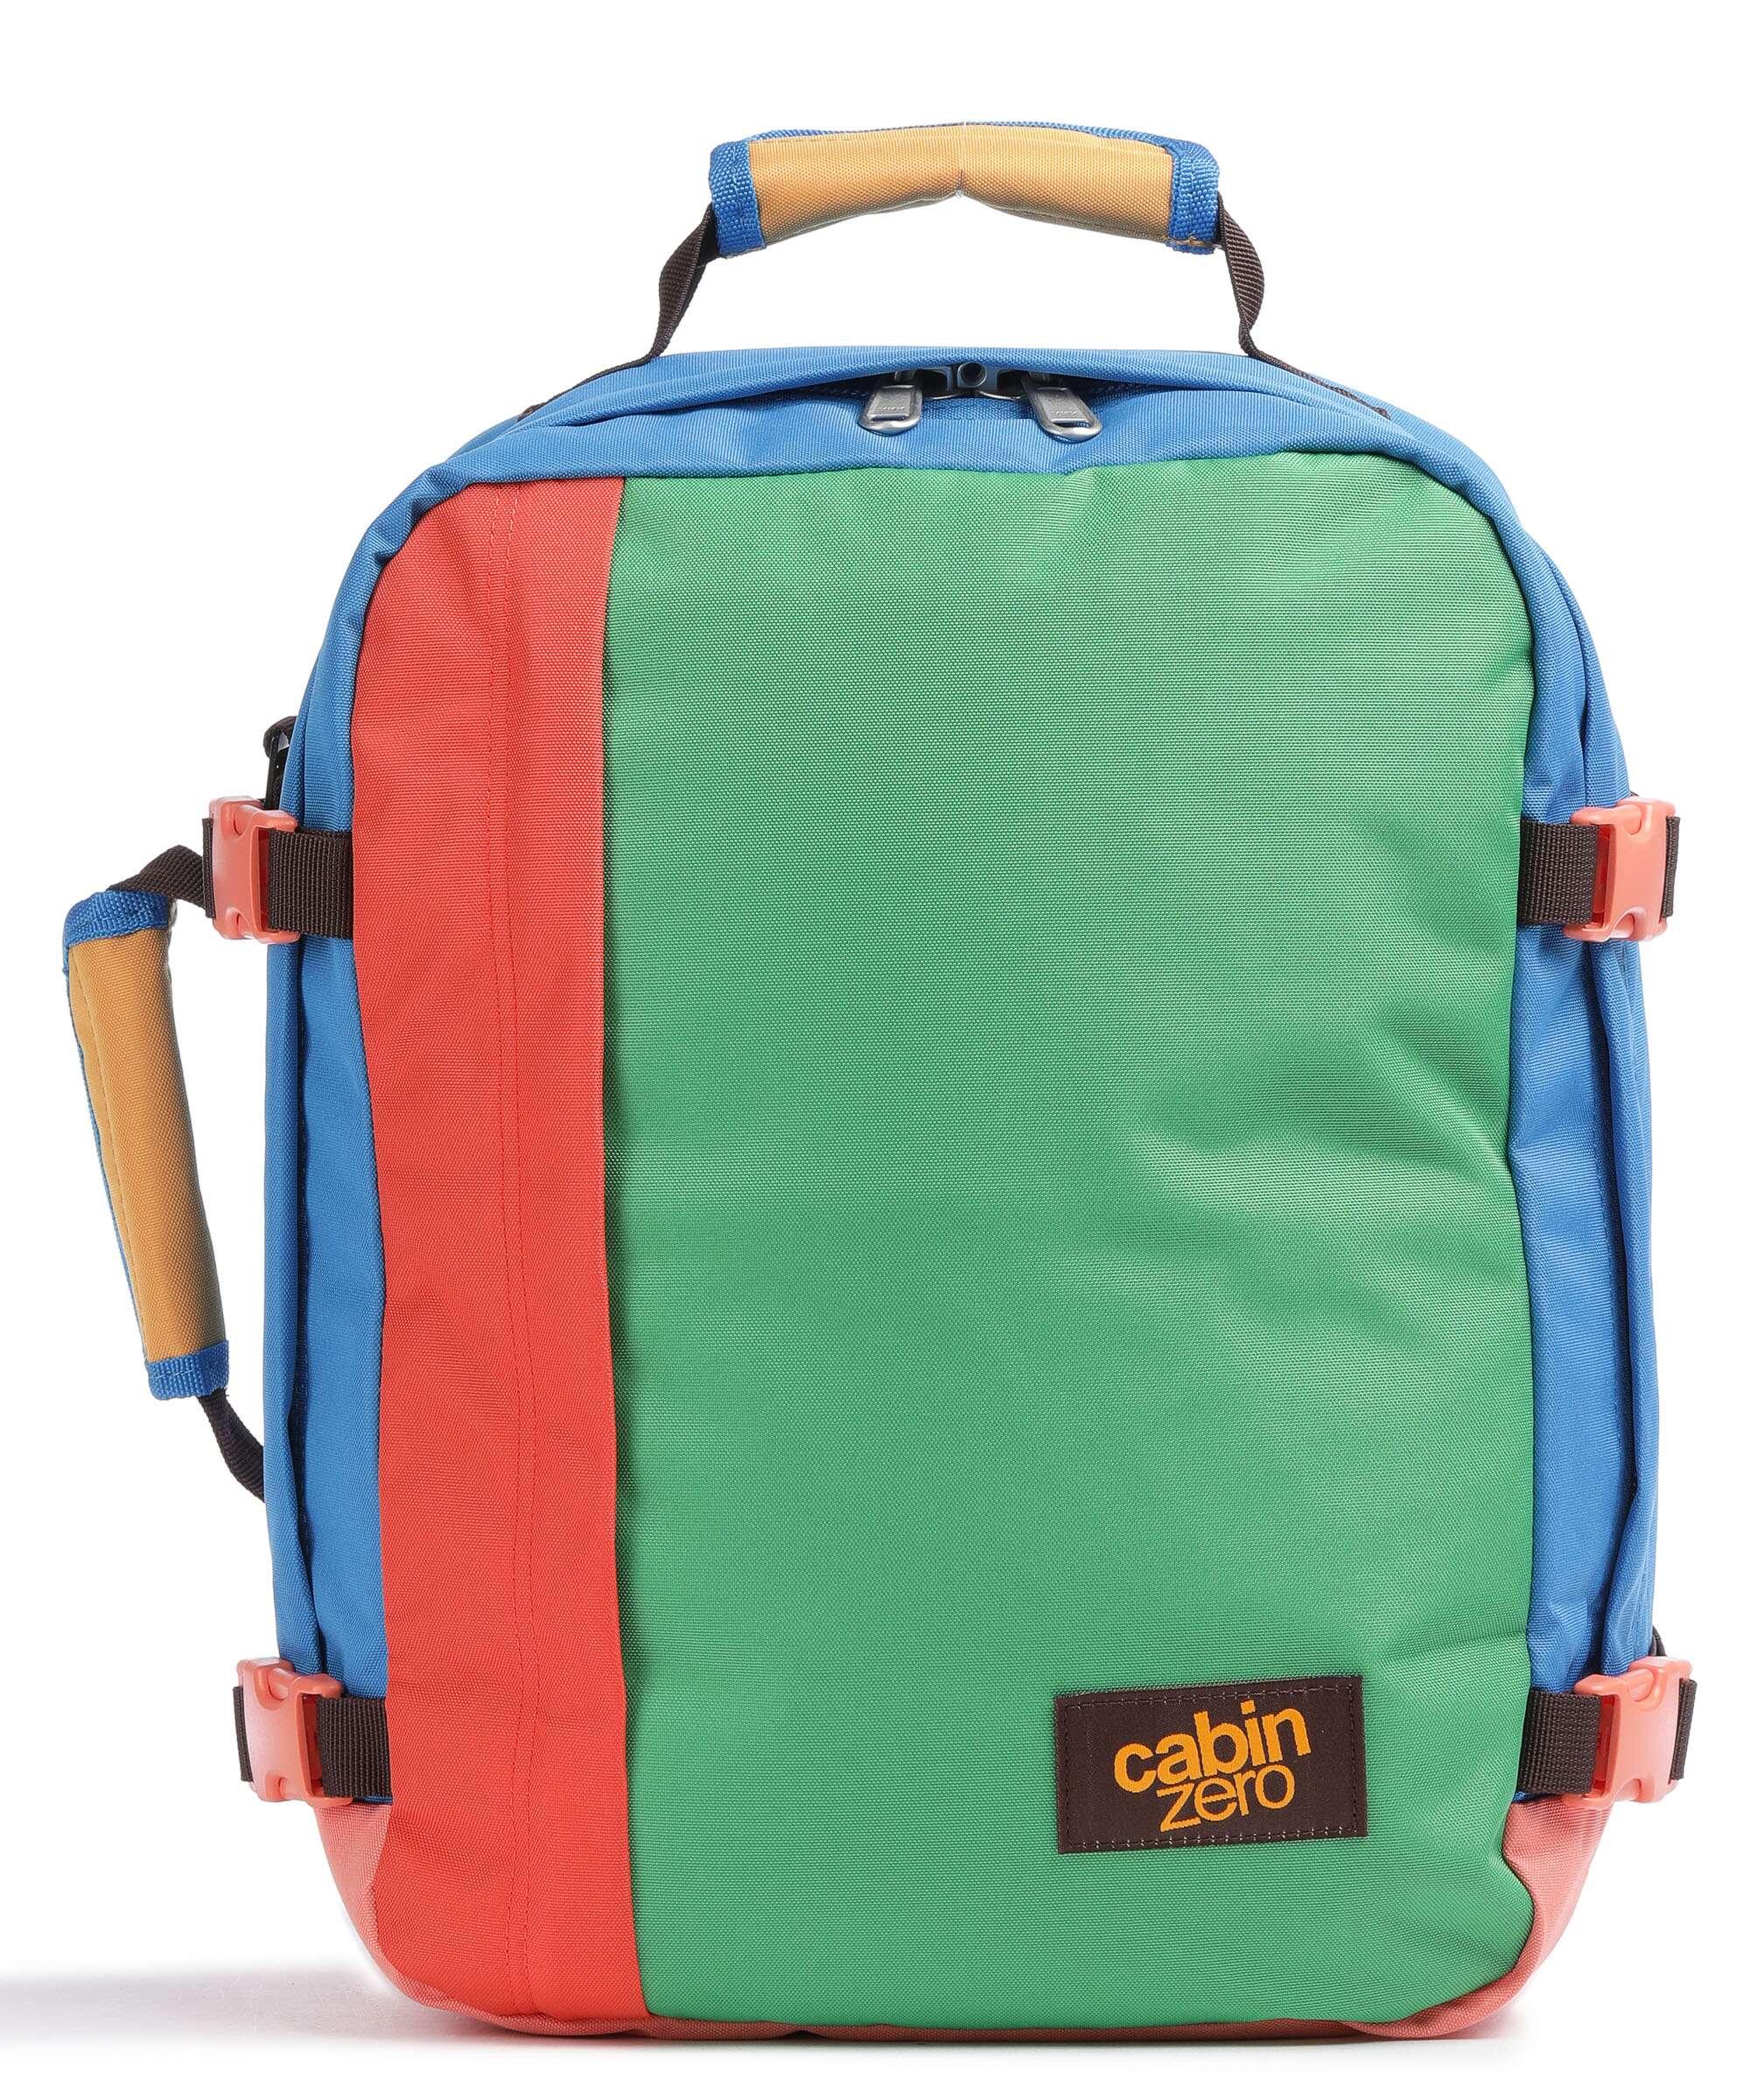 Cabin Zero Classic 28 Reiserucksack Polyester mehrfarbig